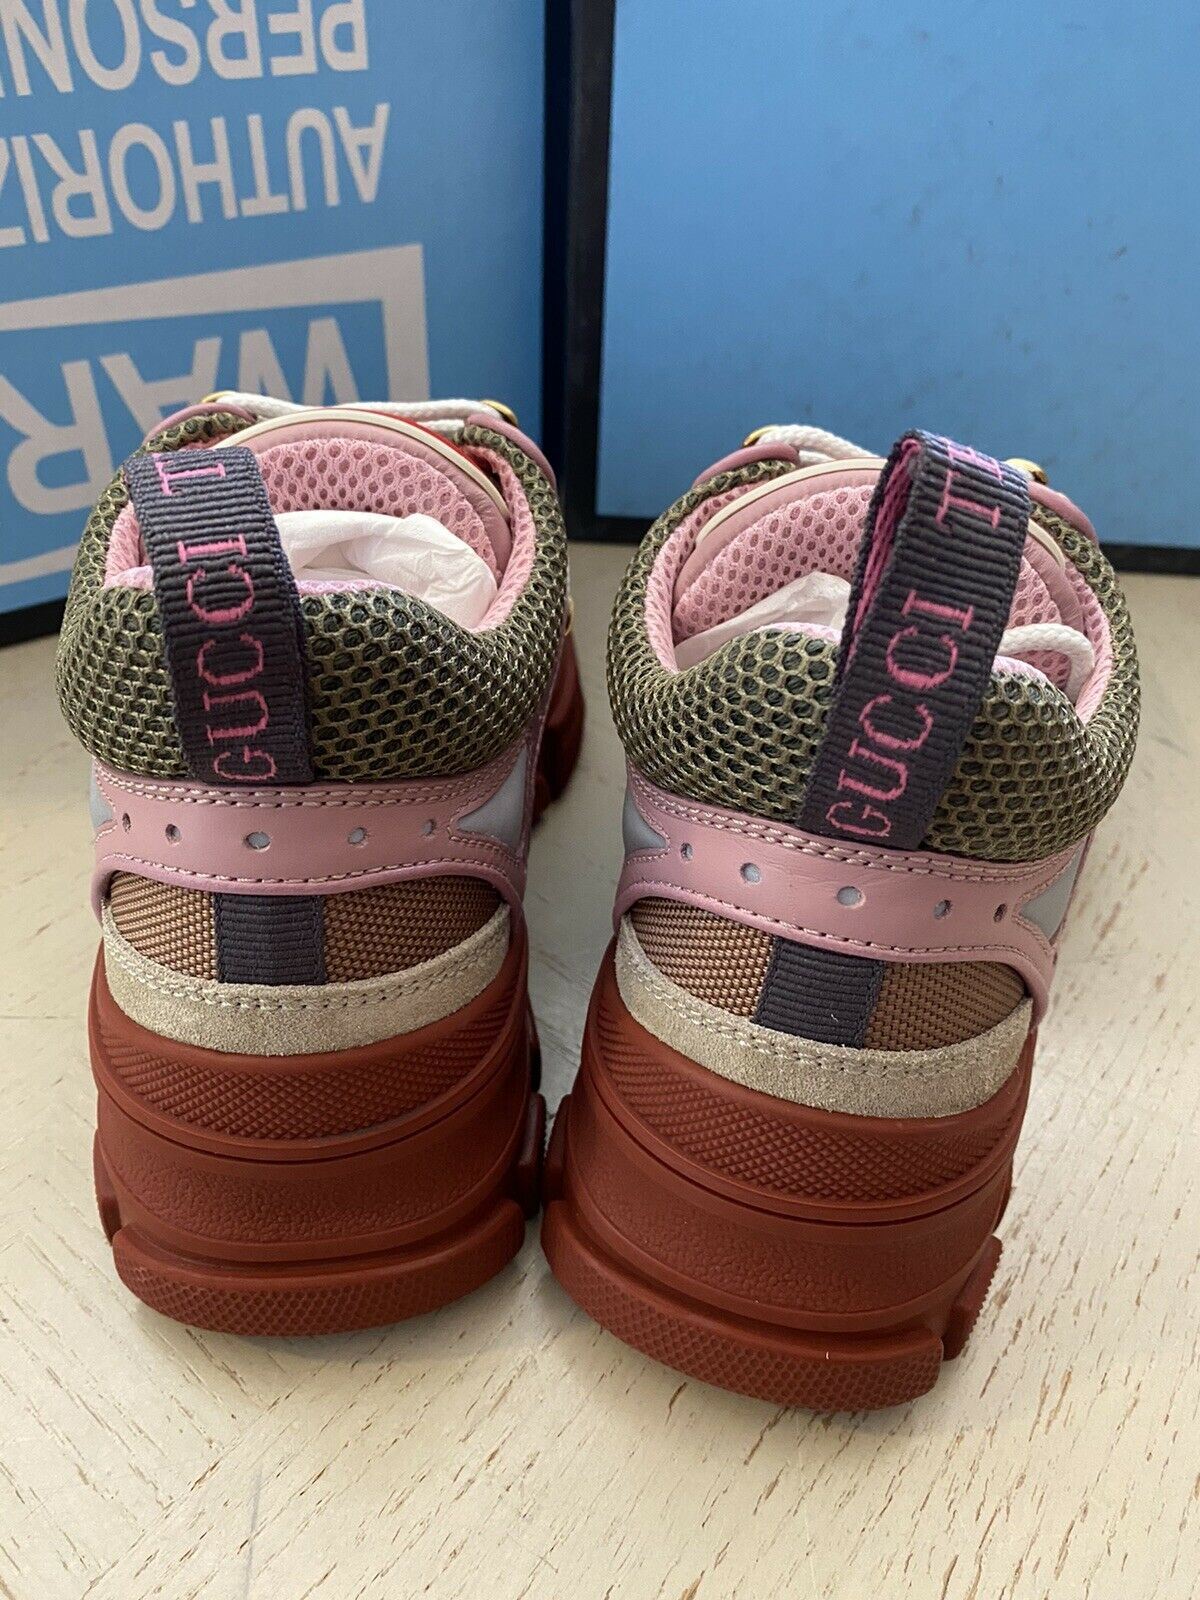 NIB $1300 Gucci Women’s Sneakers Shoes Military Green/Red/Pink 5 US/35 Eu